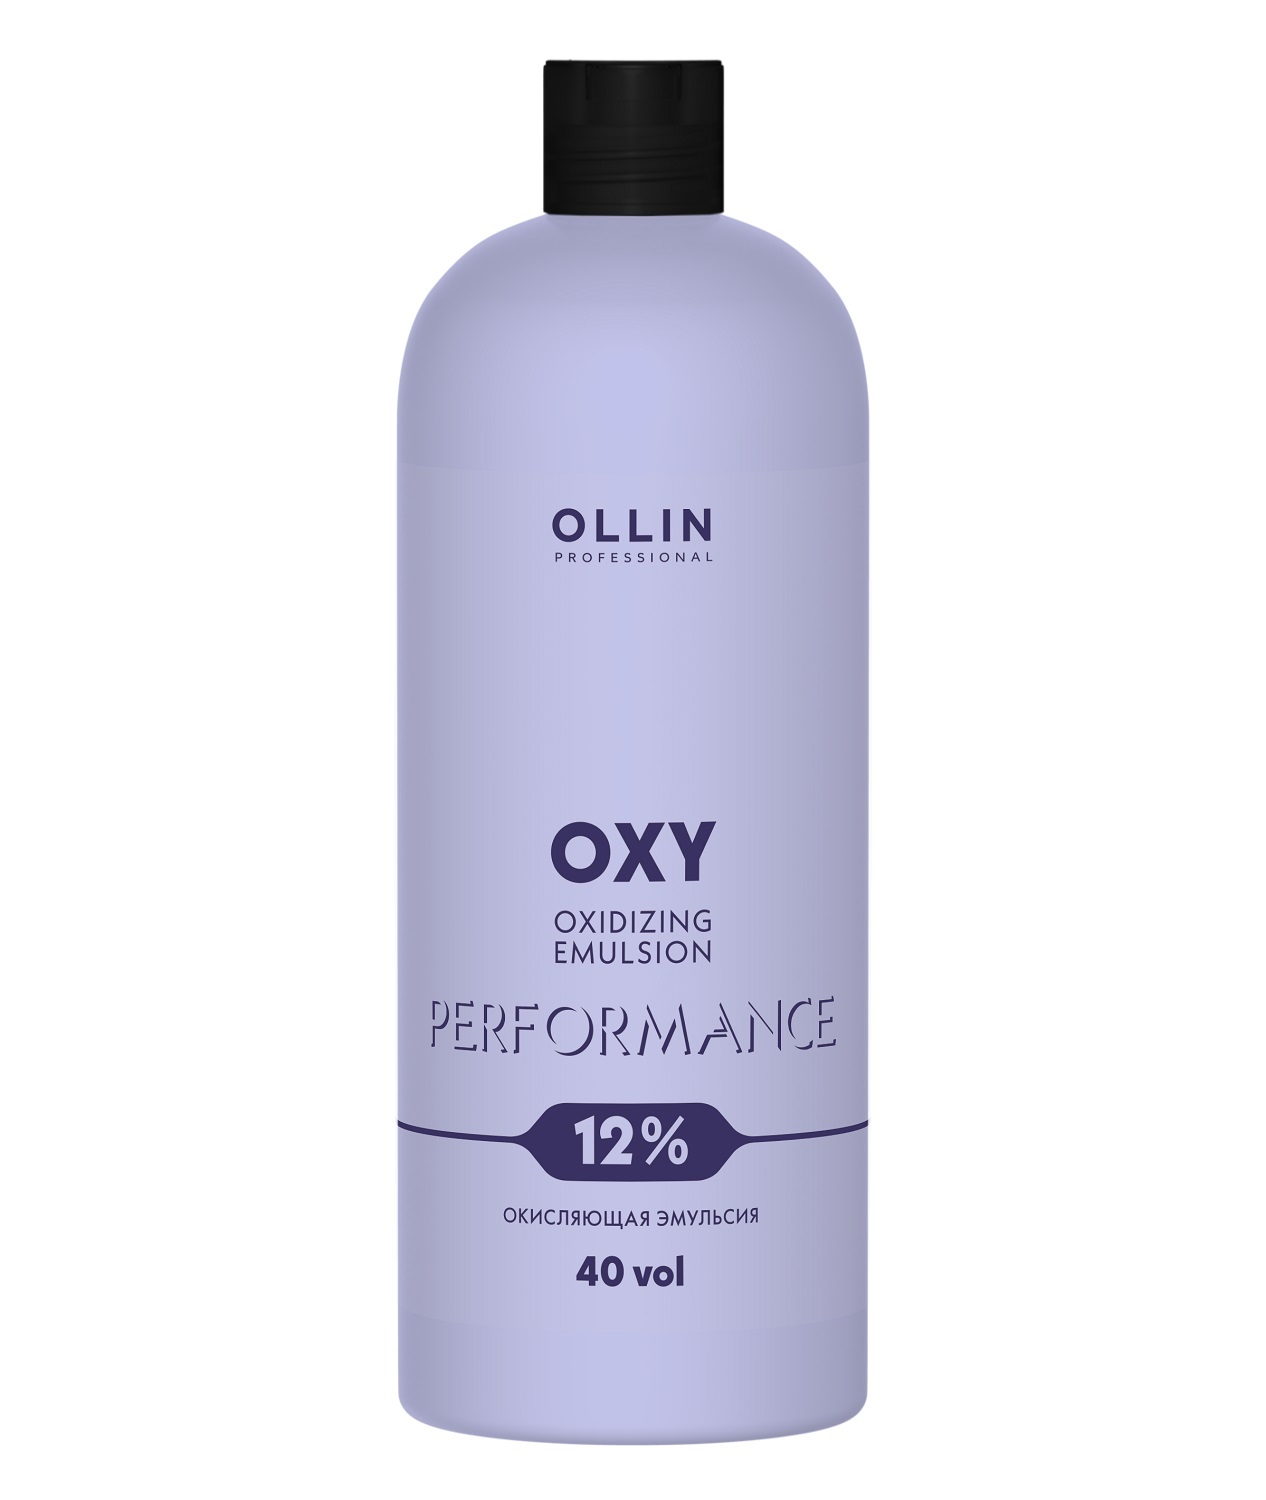 Ollin Professional Окисляющая эмульсия 12% 40 vol, 1000 мл (